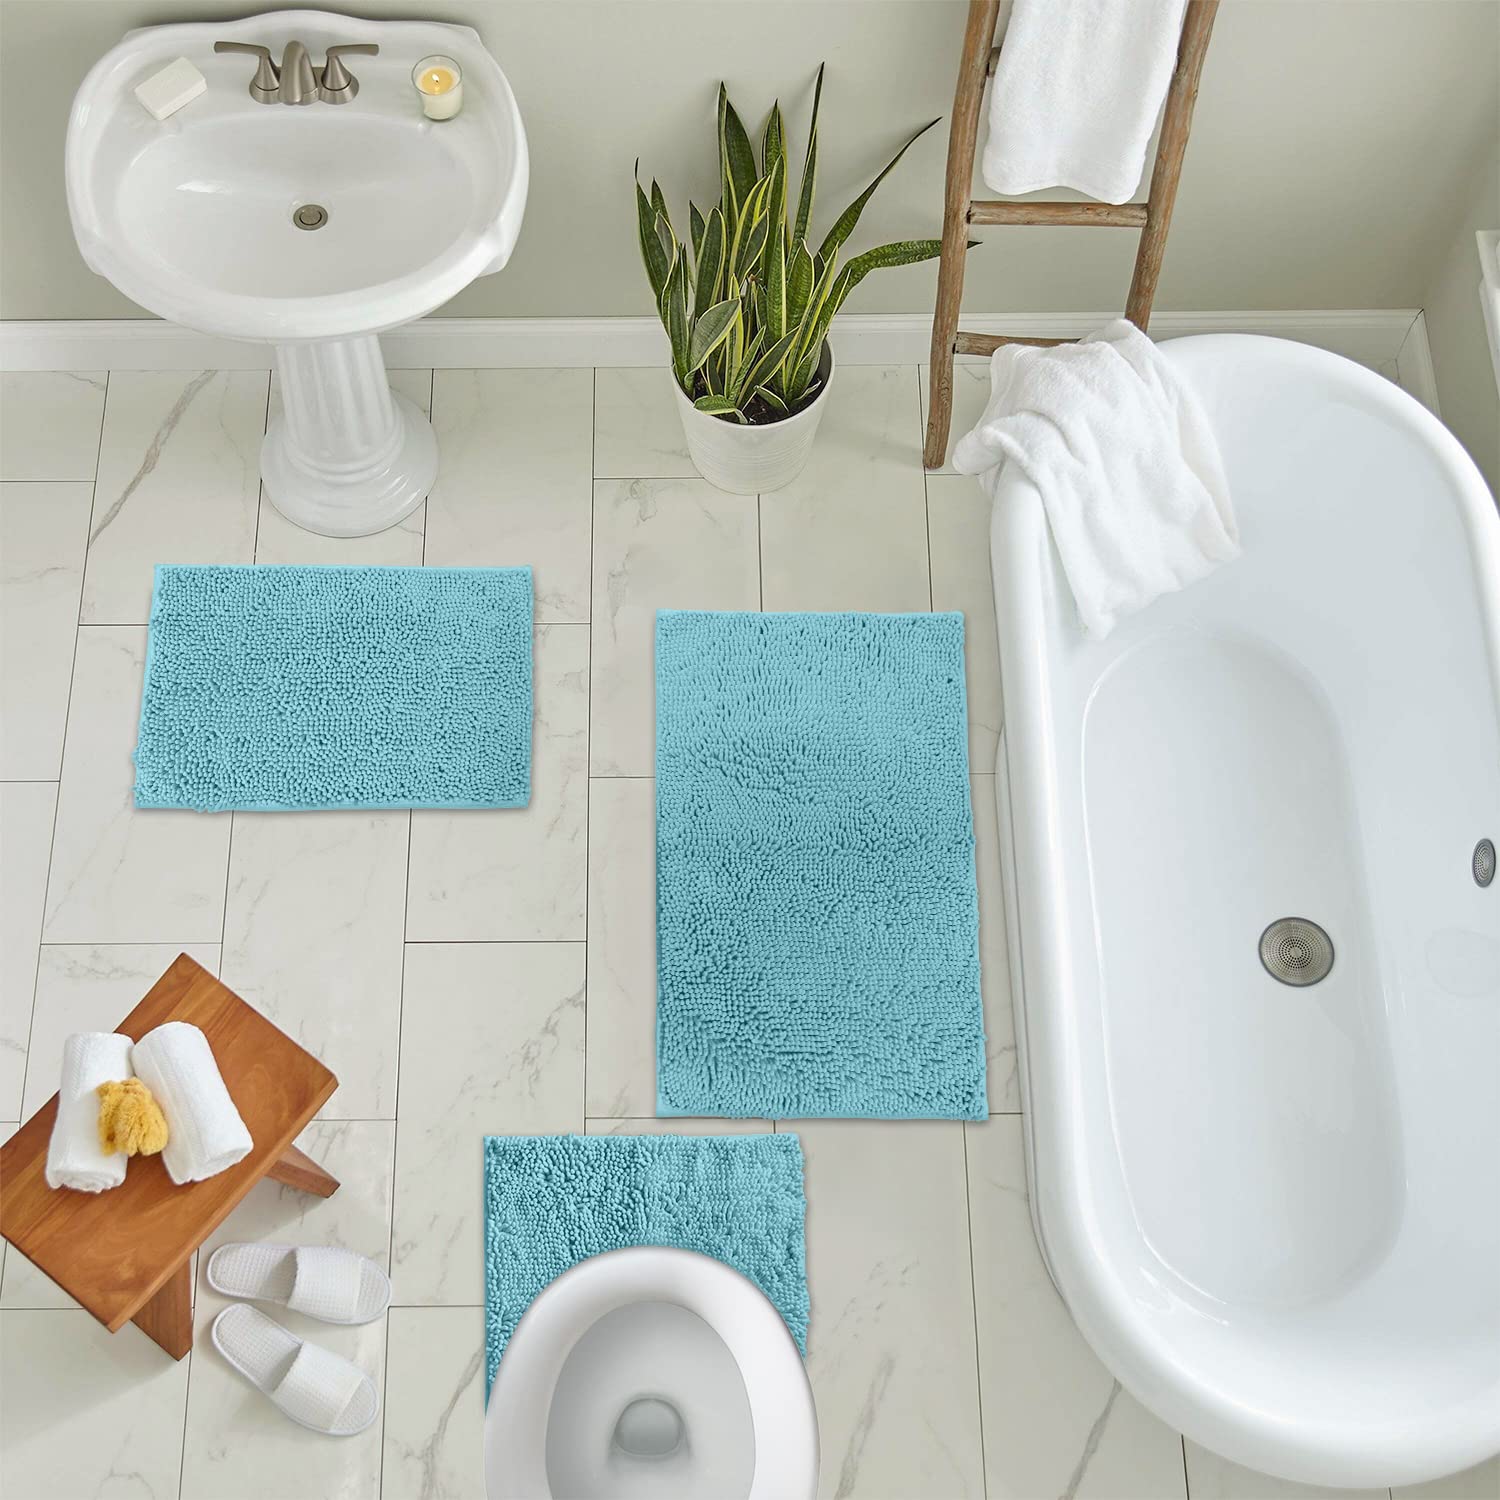 LuxUrux Bathroom Rugs 3pc Non-Slip Shaggy Chenille Bathroom Mat Set, Includes U-Shaped Contour Toilet Mat, 20 x 30'' and 16 x 24'' Bath Mat, Machine Washable, Spa Blue.  - Very Good